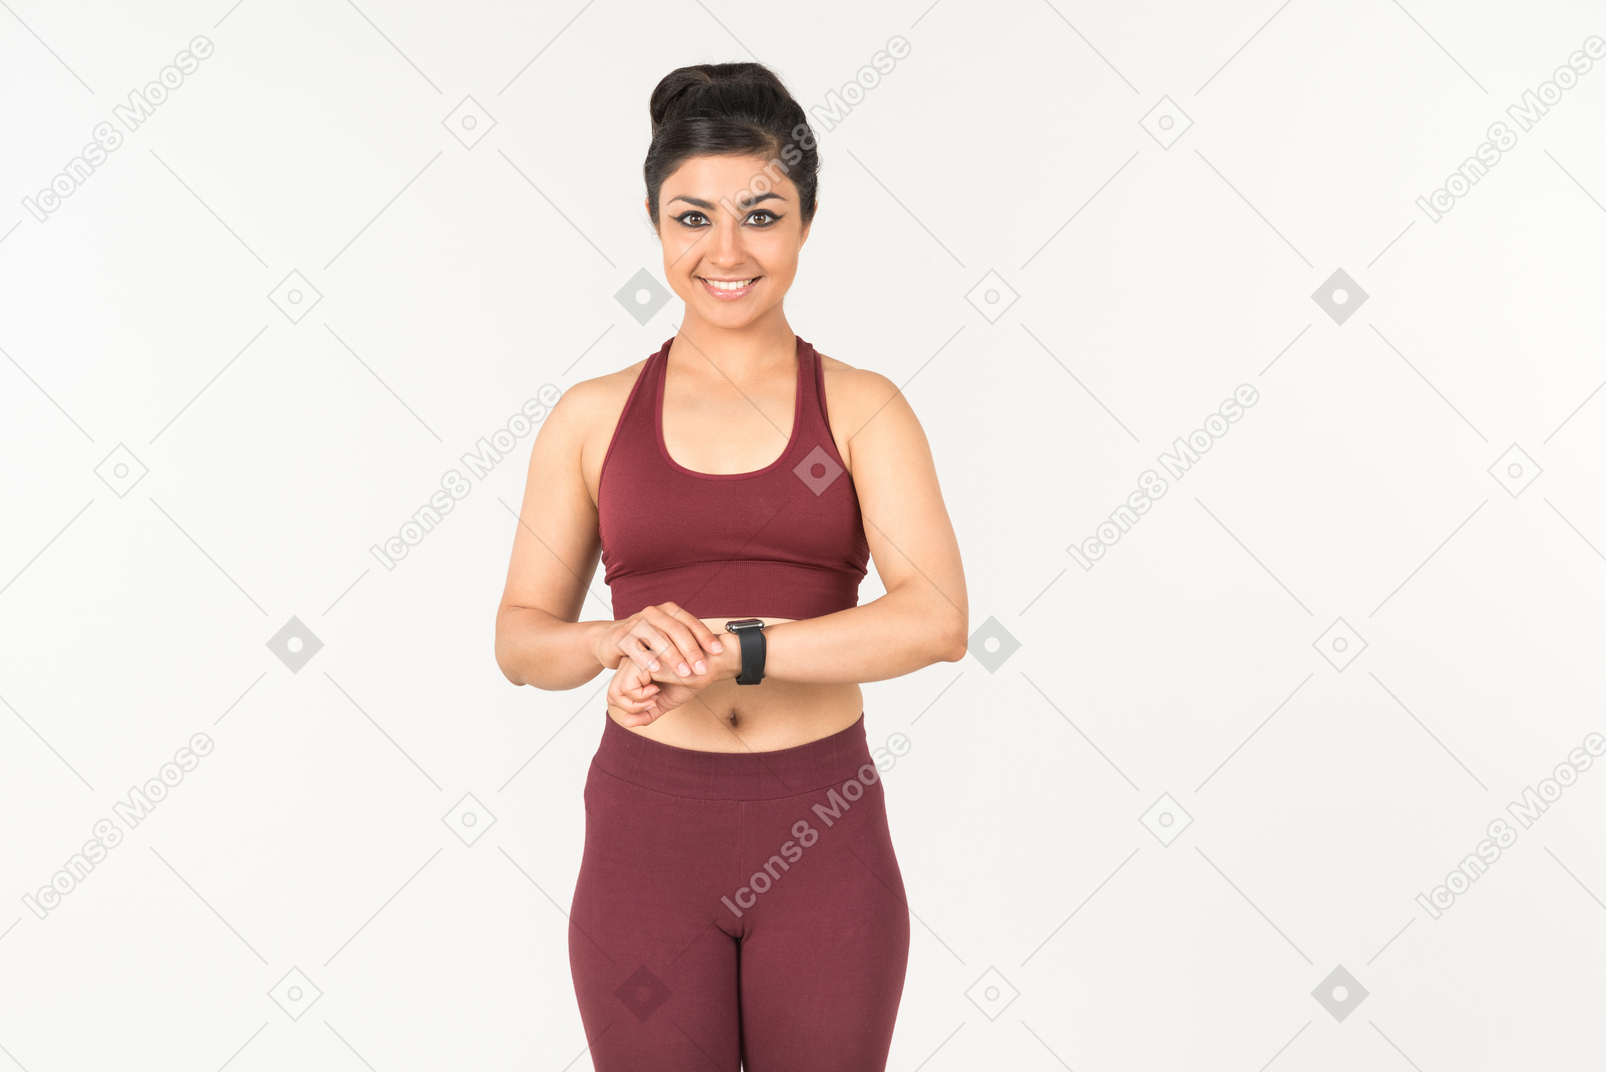 Sporstwear的印地安女孩检查健身跟踪仪的